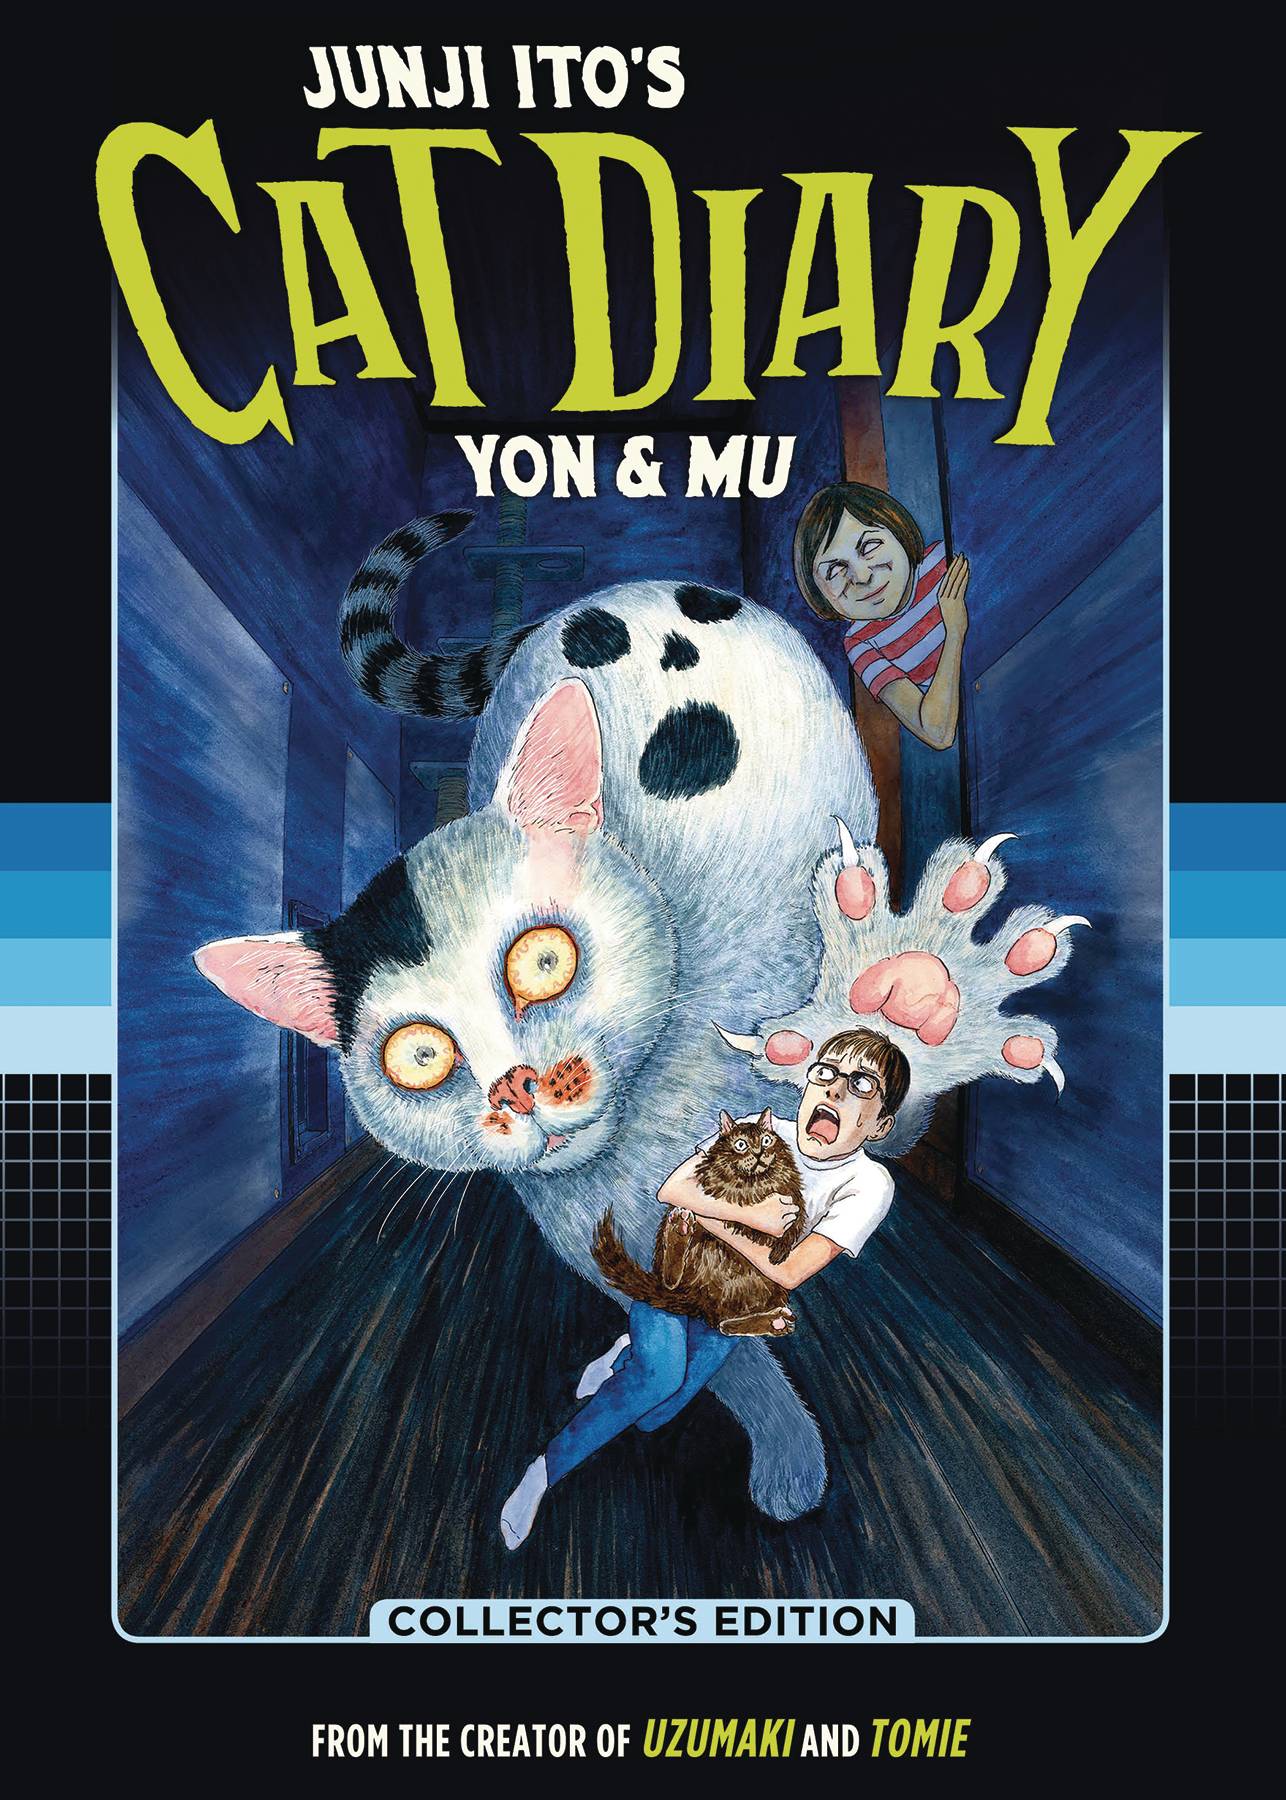 Junji Ito's Cat Diary book cover